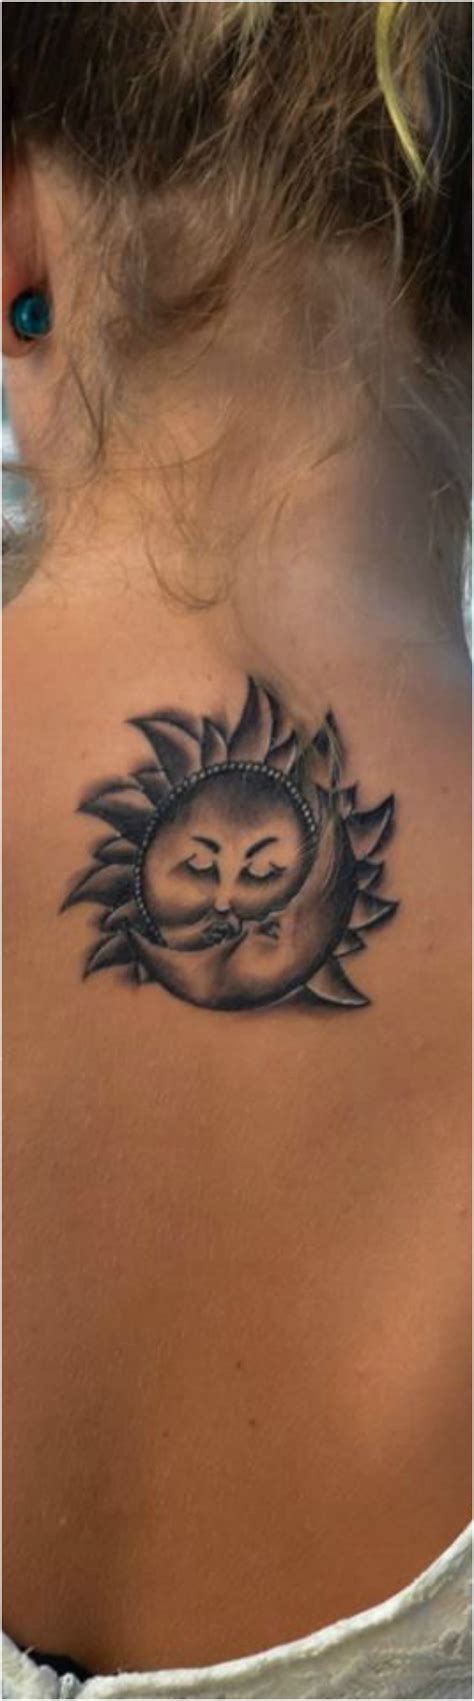 Sun Tattoos Ideas For Men And Women Sun Tattoos Tattoos Unique